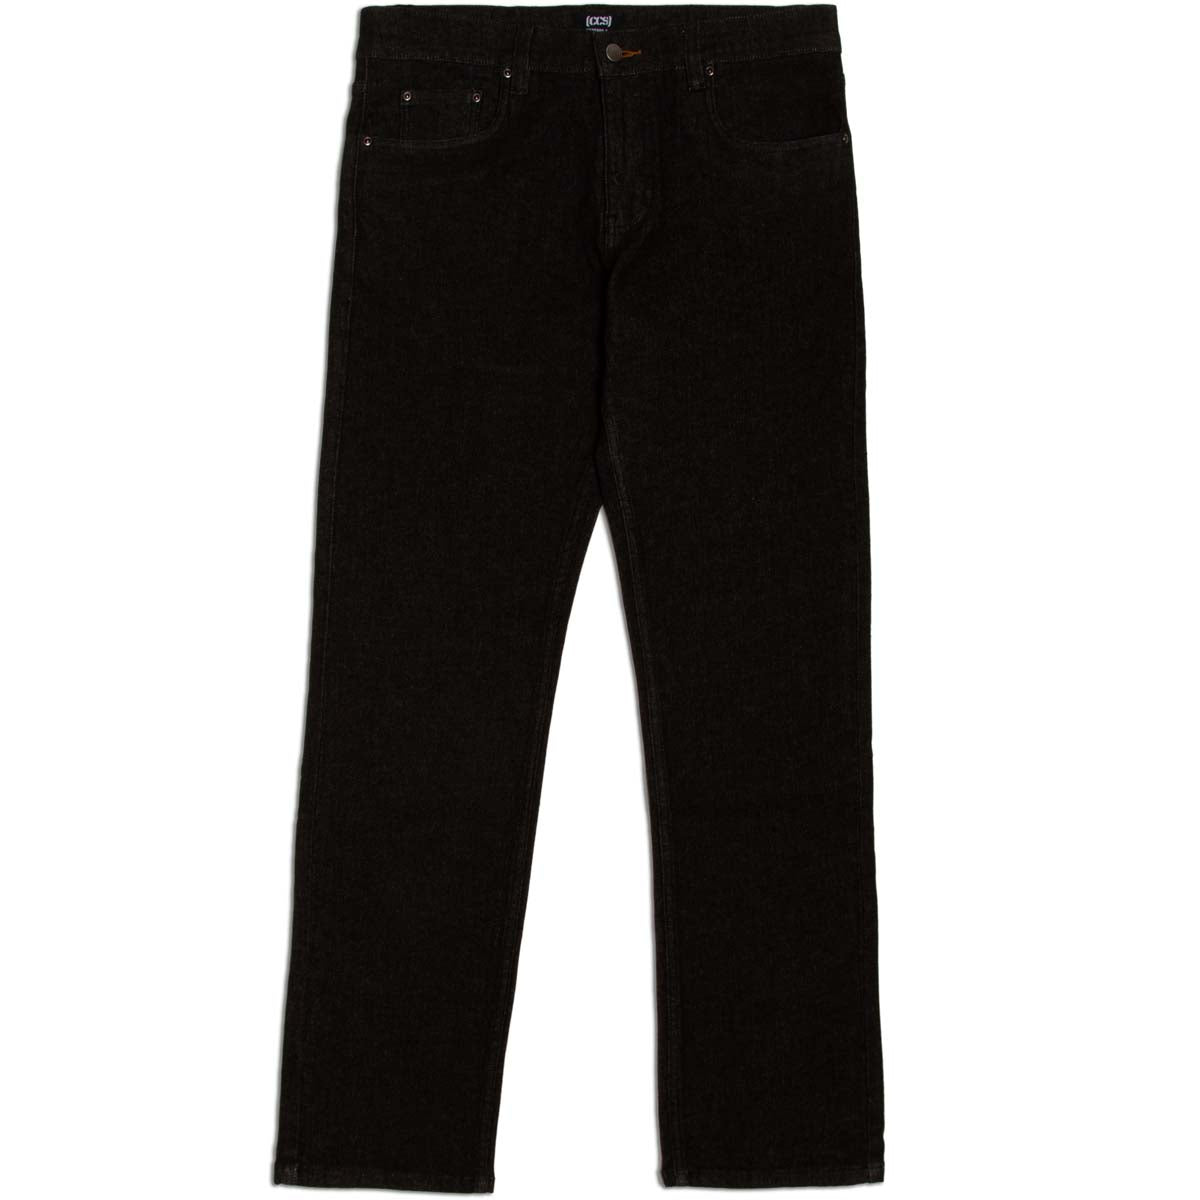 CCS 12oz Stretch Slim Denim Jeans - 12oz Black image 5